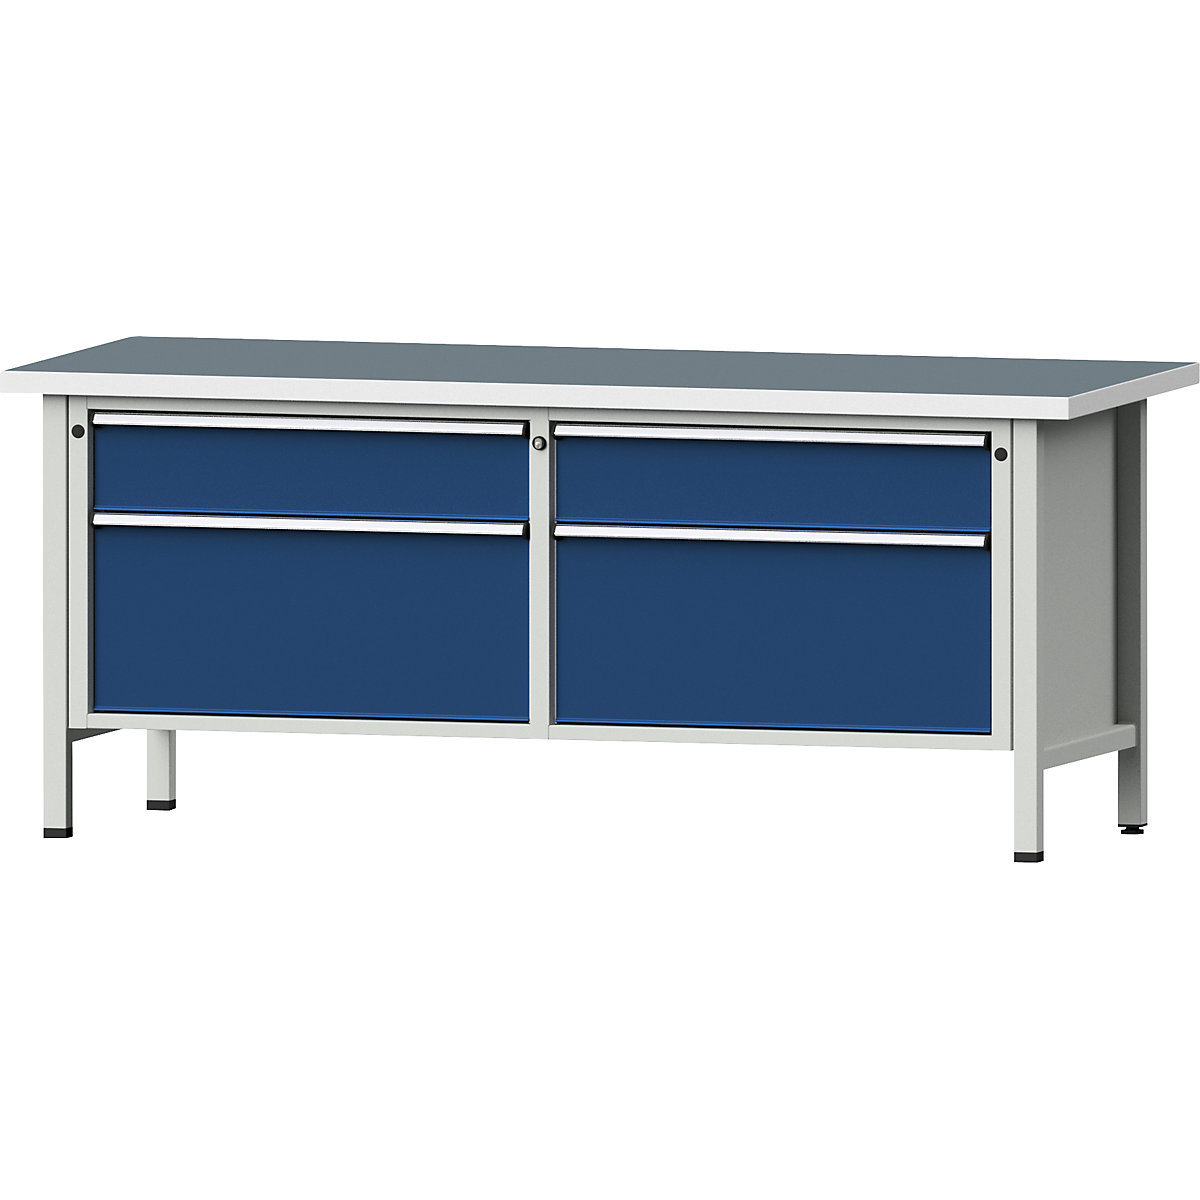 Établi avec tiroirs XL/XXL, sur piétement – ANKE, largeur 2000 mm, 4 tiroirs, plateau universel, façade bleu gentiane-9